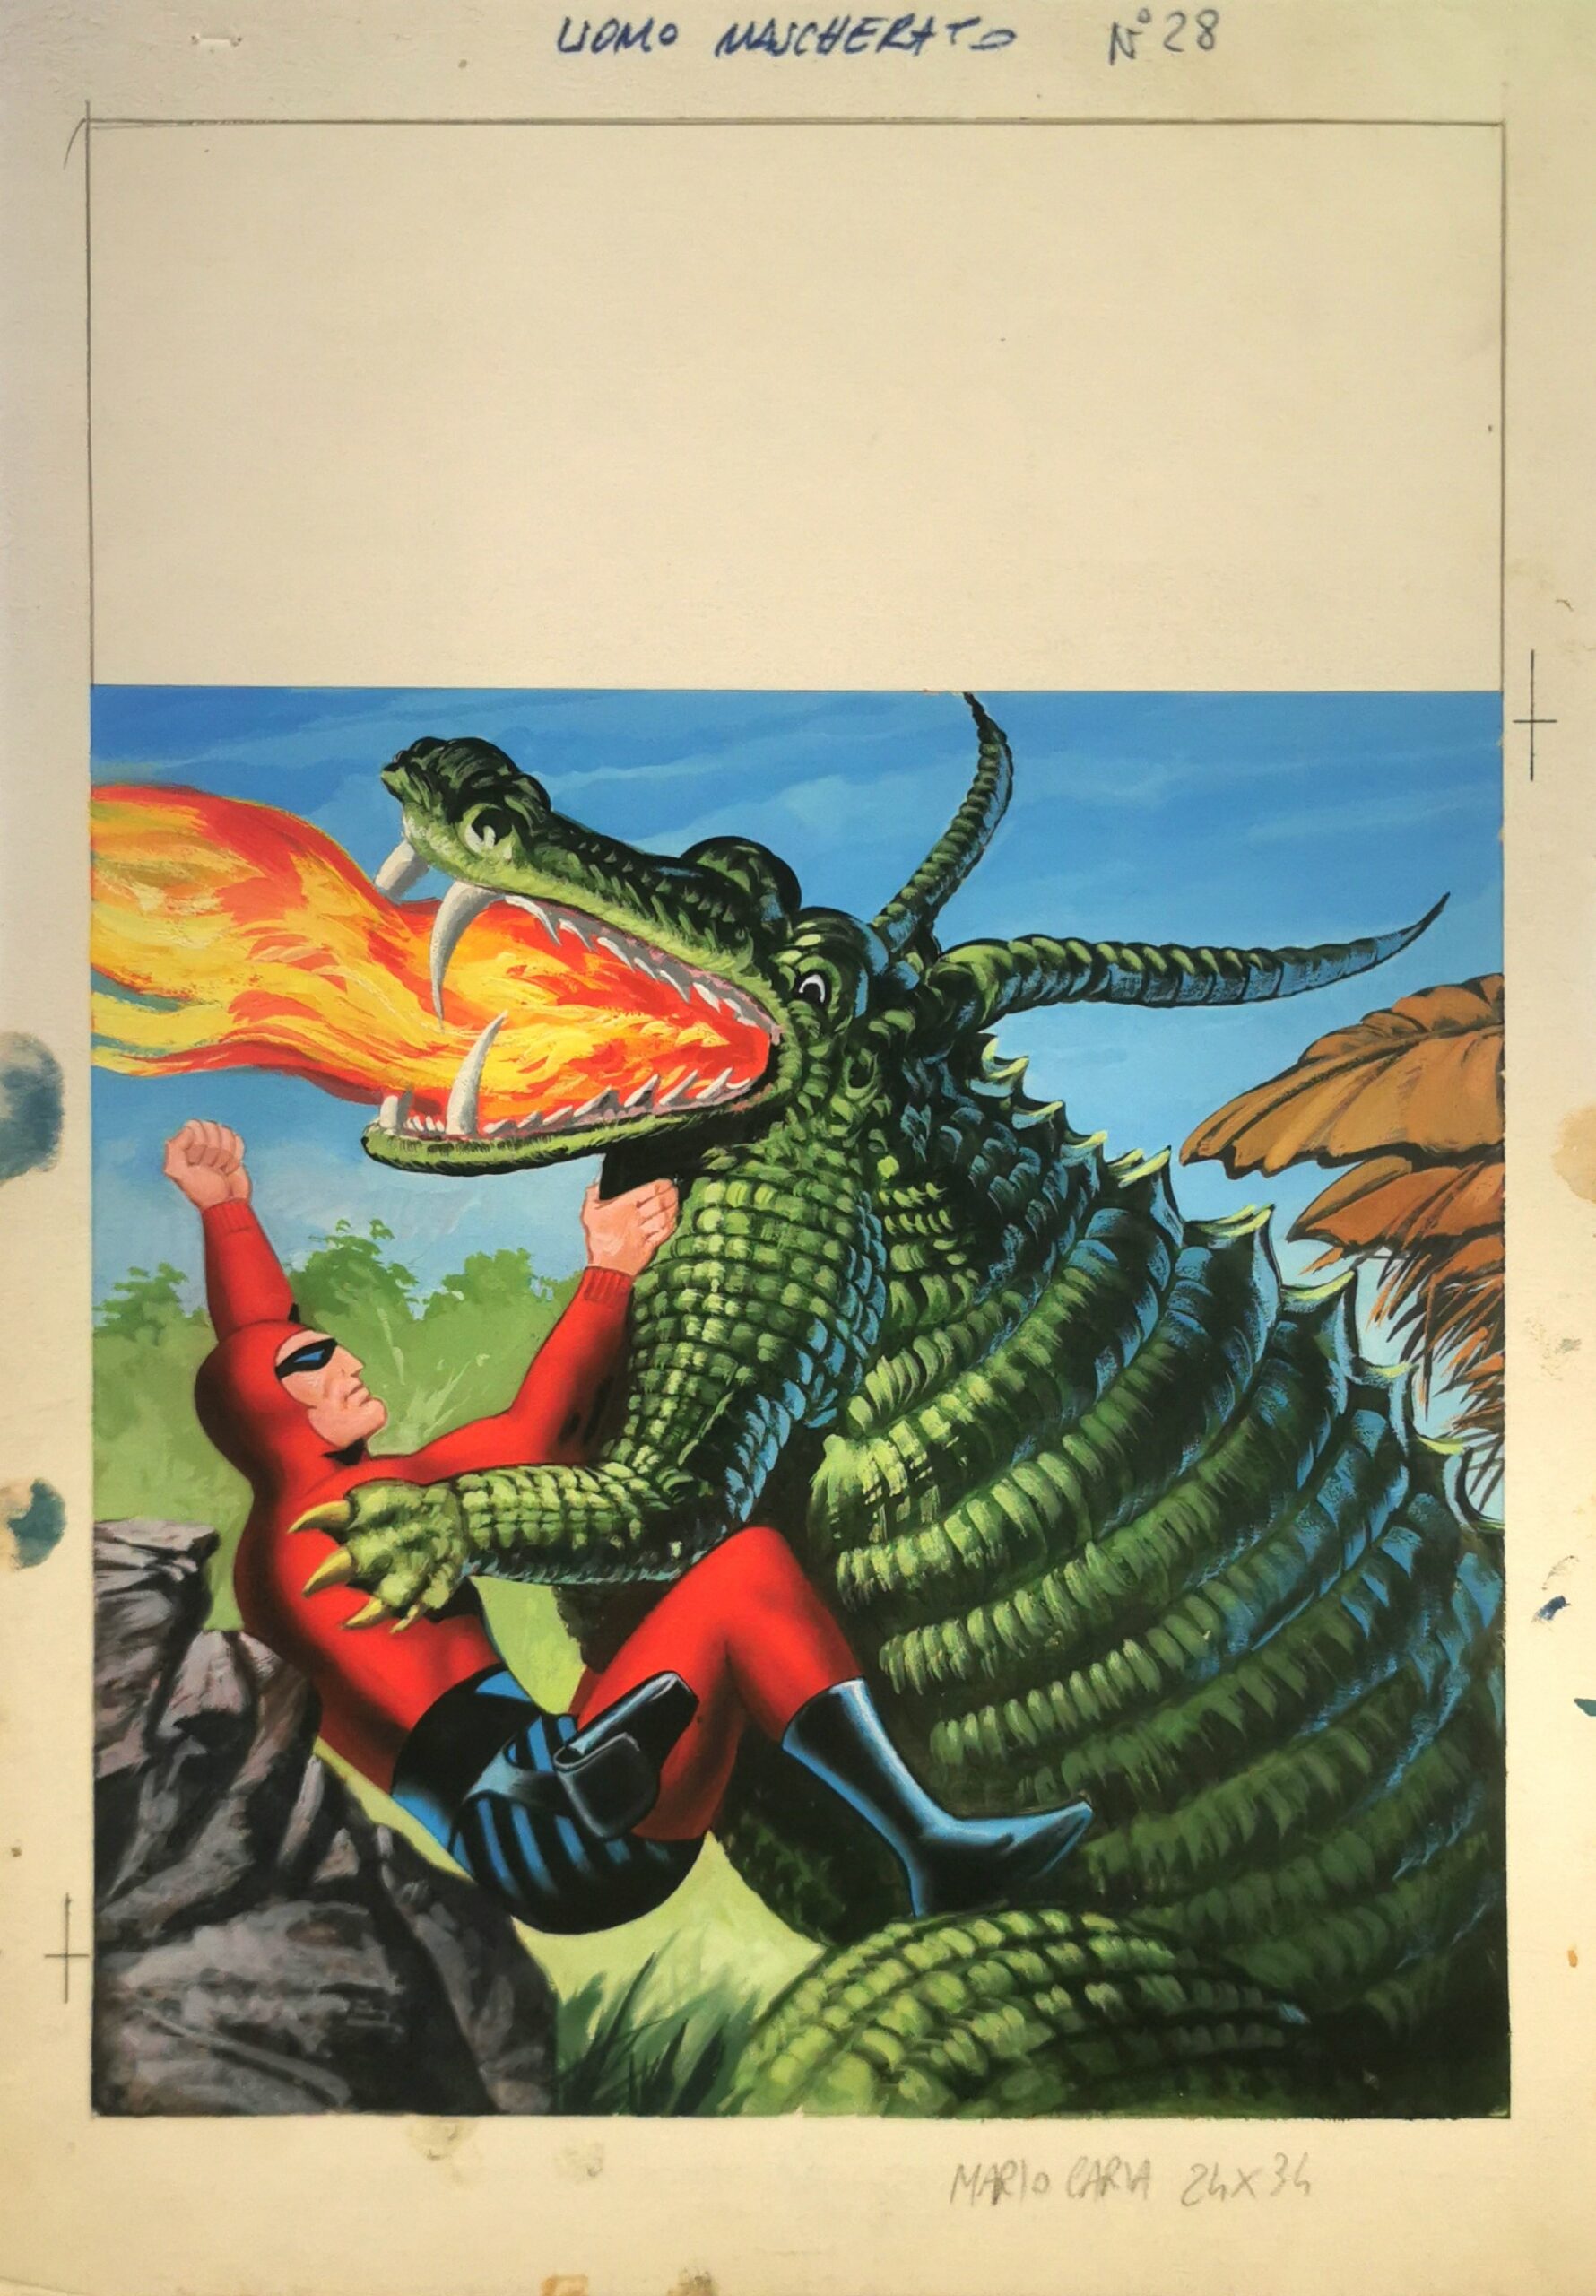 Copertina originale Mario Caria – Uomo Mascherato Avventure Americane III Serie n. 28